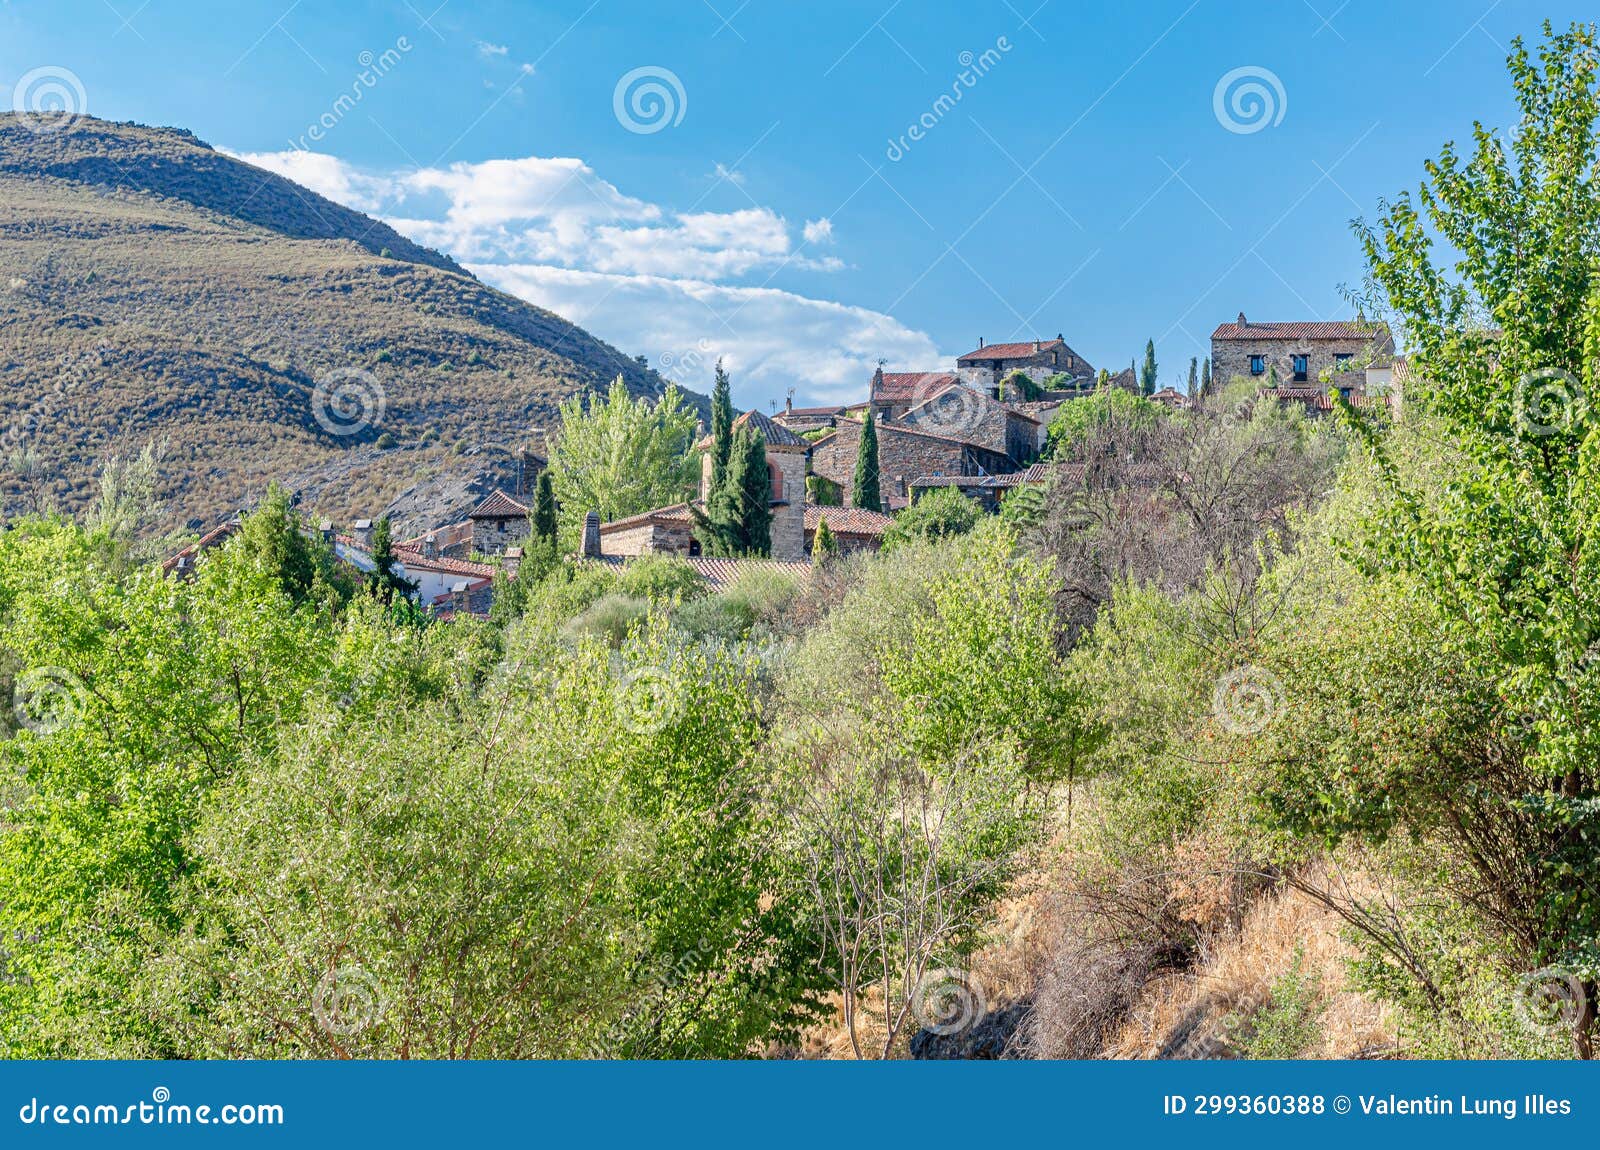 view of patones de arriba village, spain